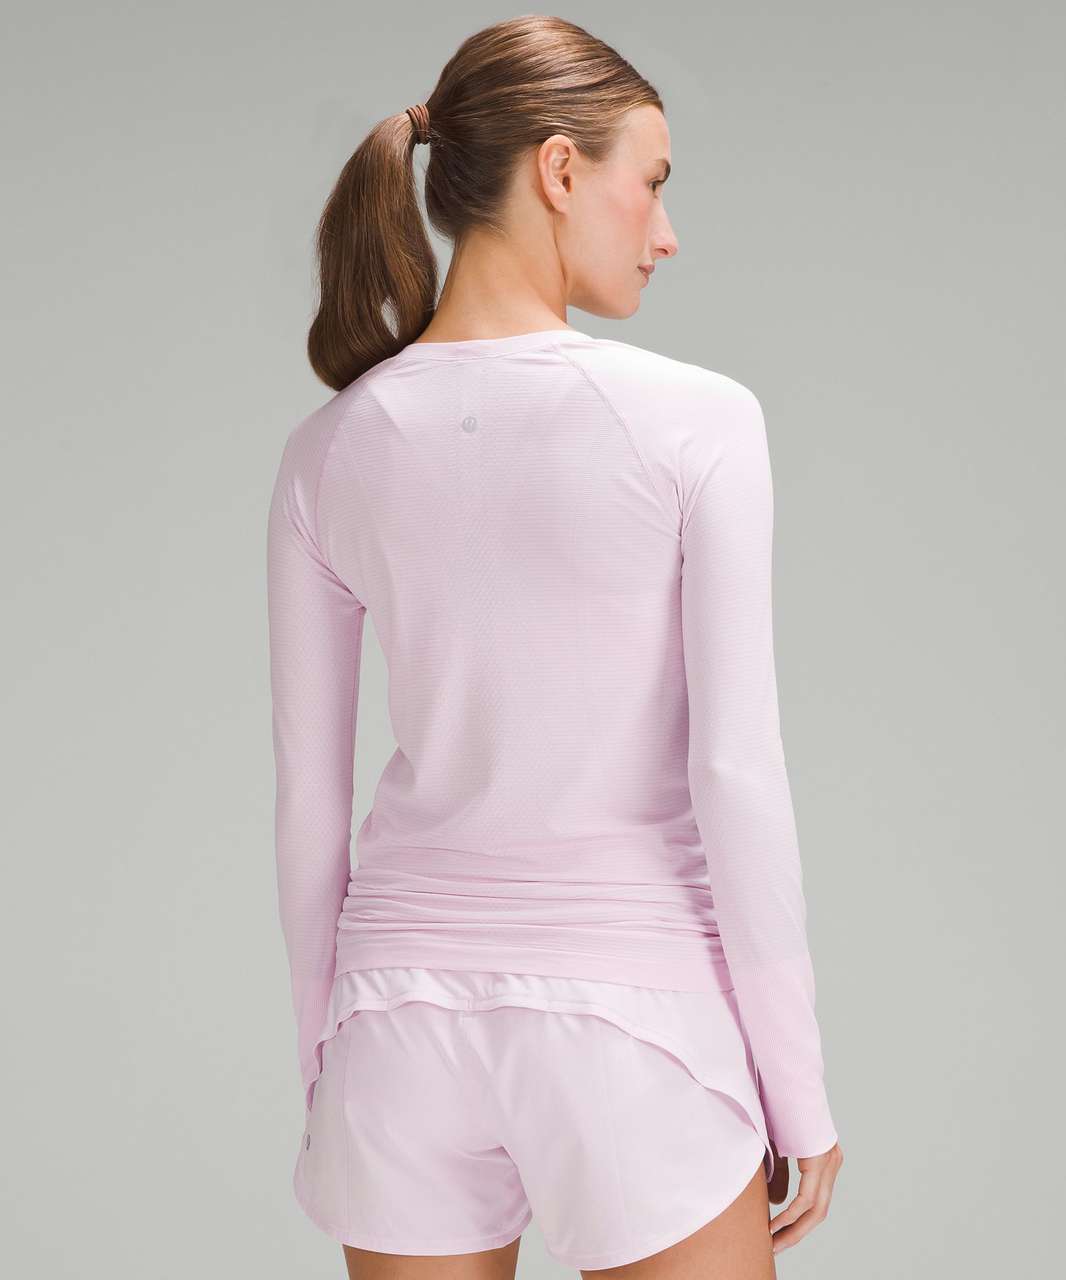 Lululemon Swiftly Tech Long-Sleeve Shirt 2.0 - Meadowsweet Pink / Meadowsweet Pink